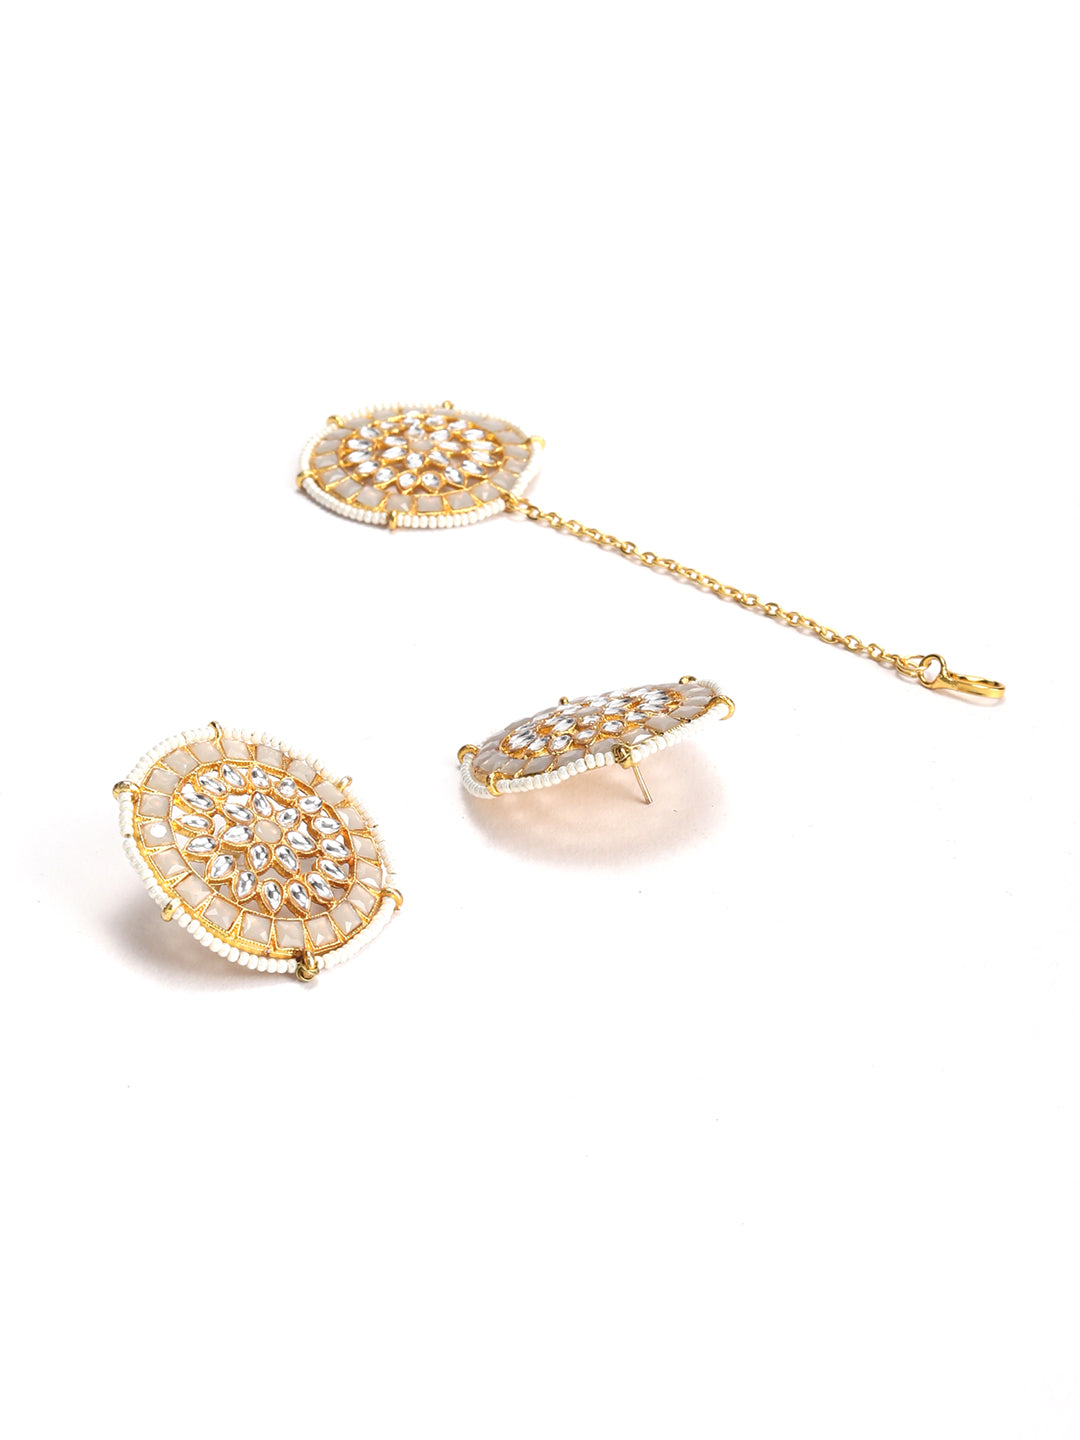 Grey Pearls Beads Kundan Stones Gold Plated Choker Set with MaangTikka